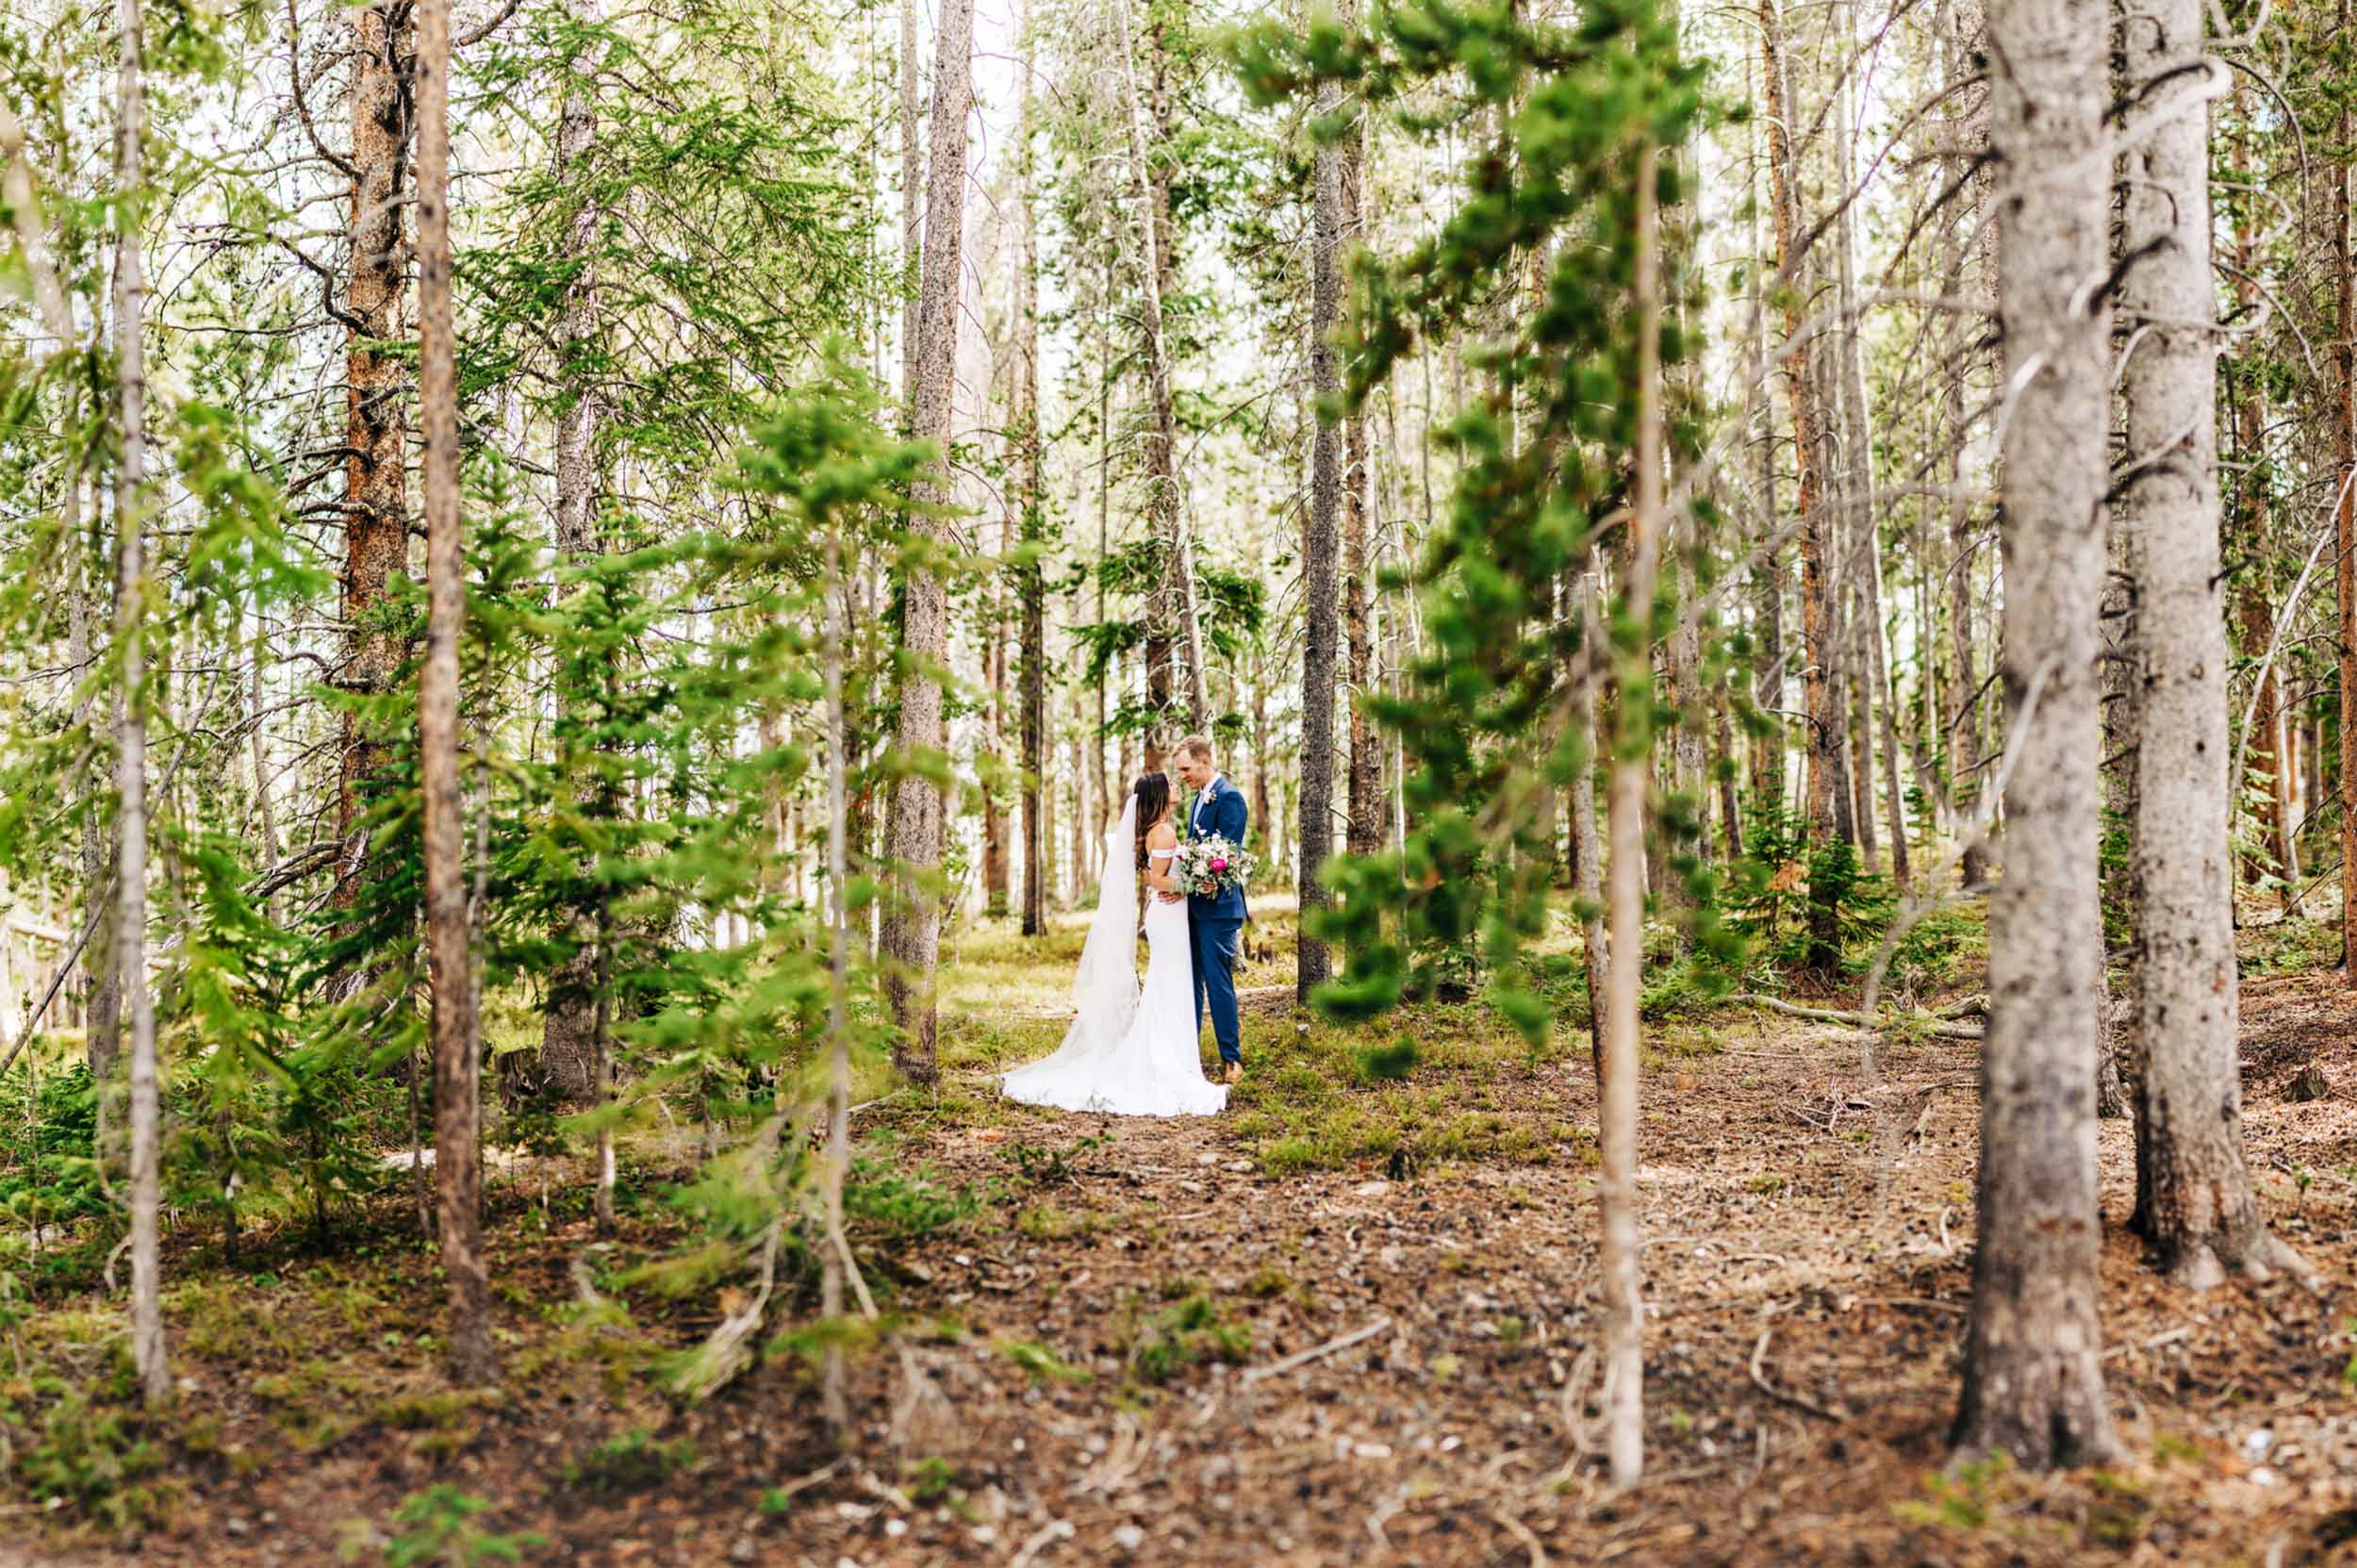 Brenizer wedding photo in the woods in Breckenridge